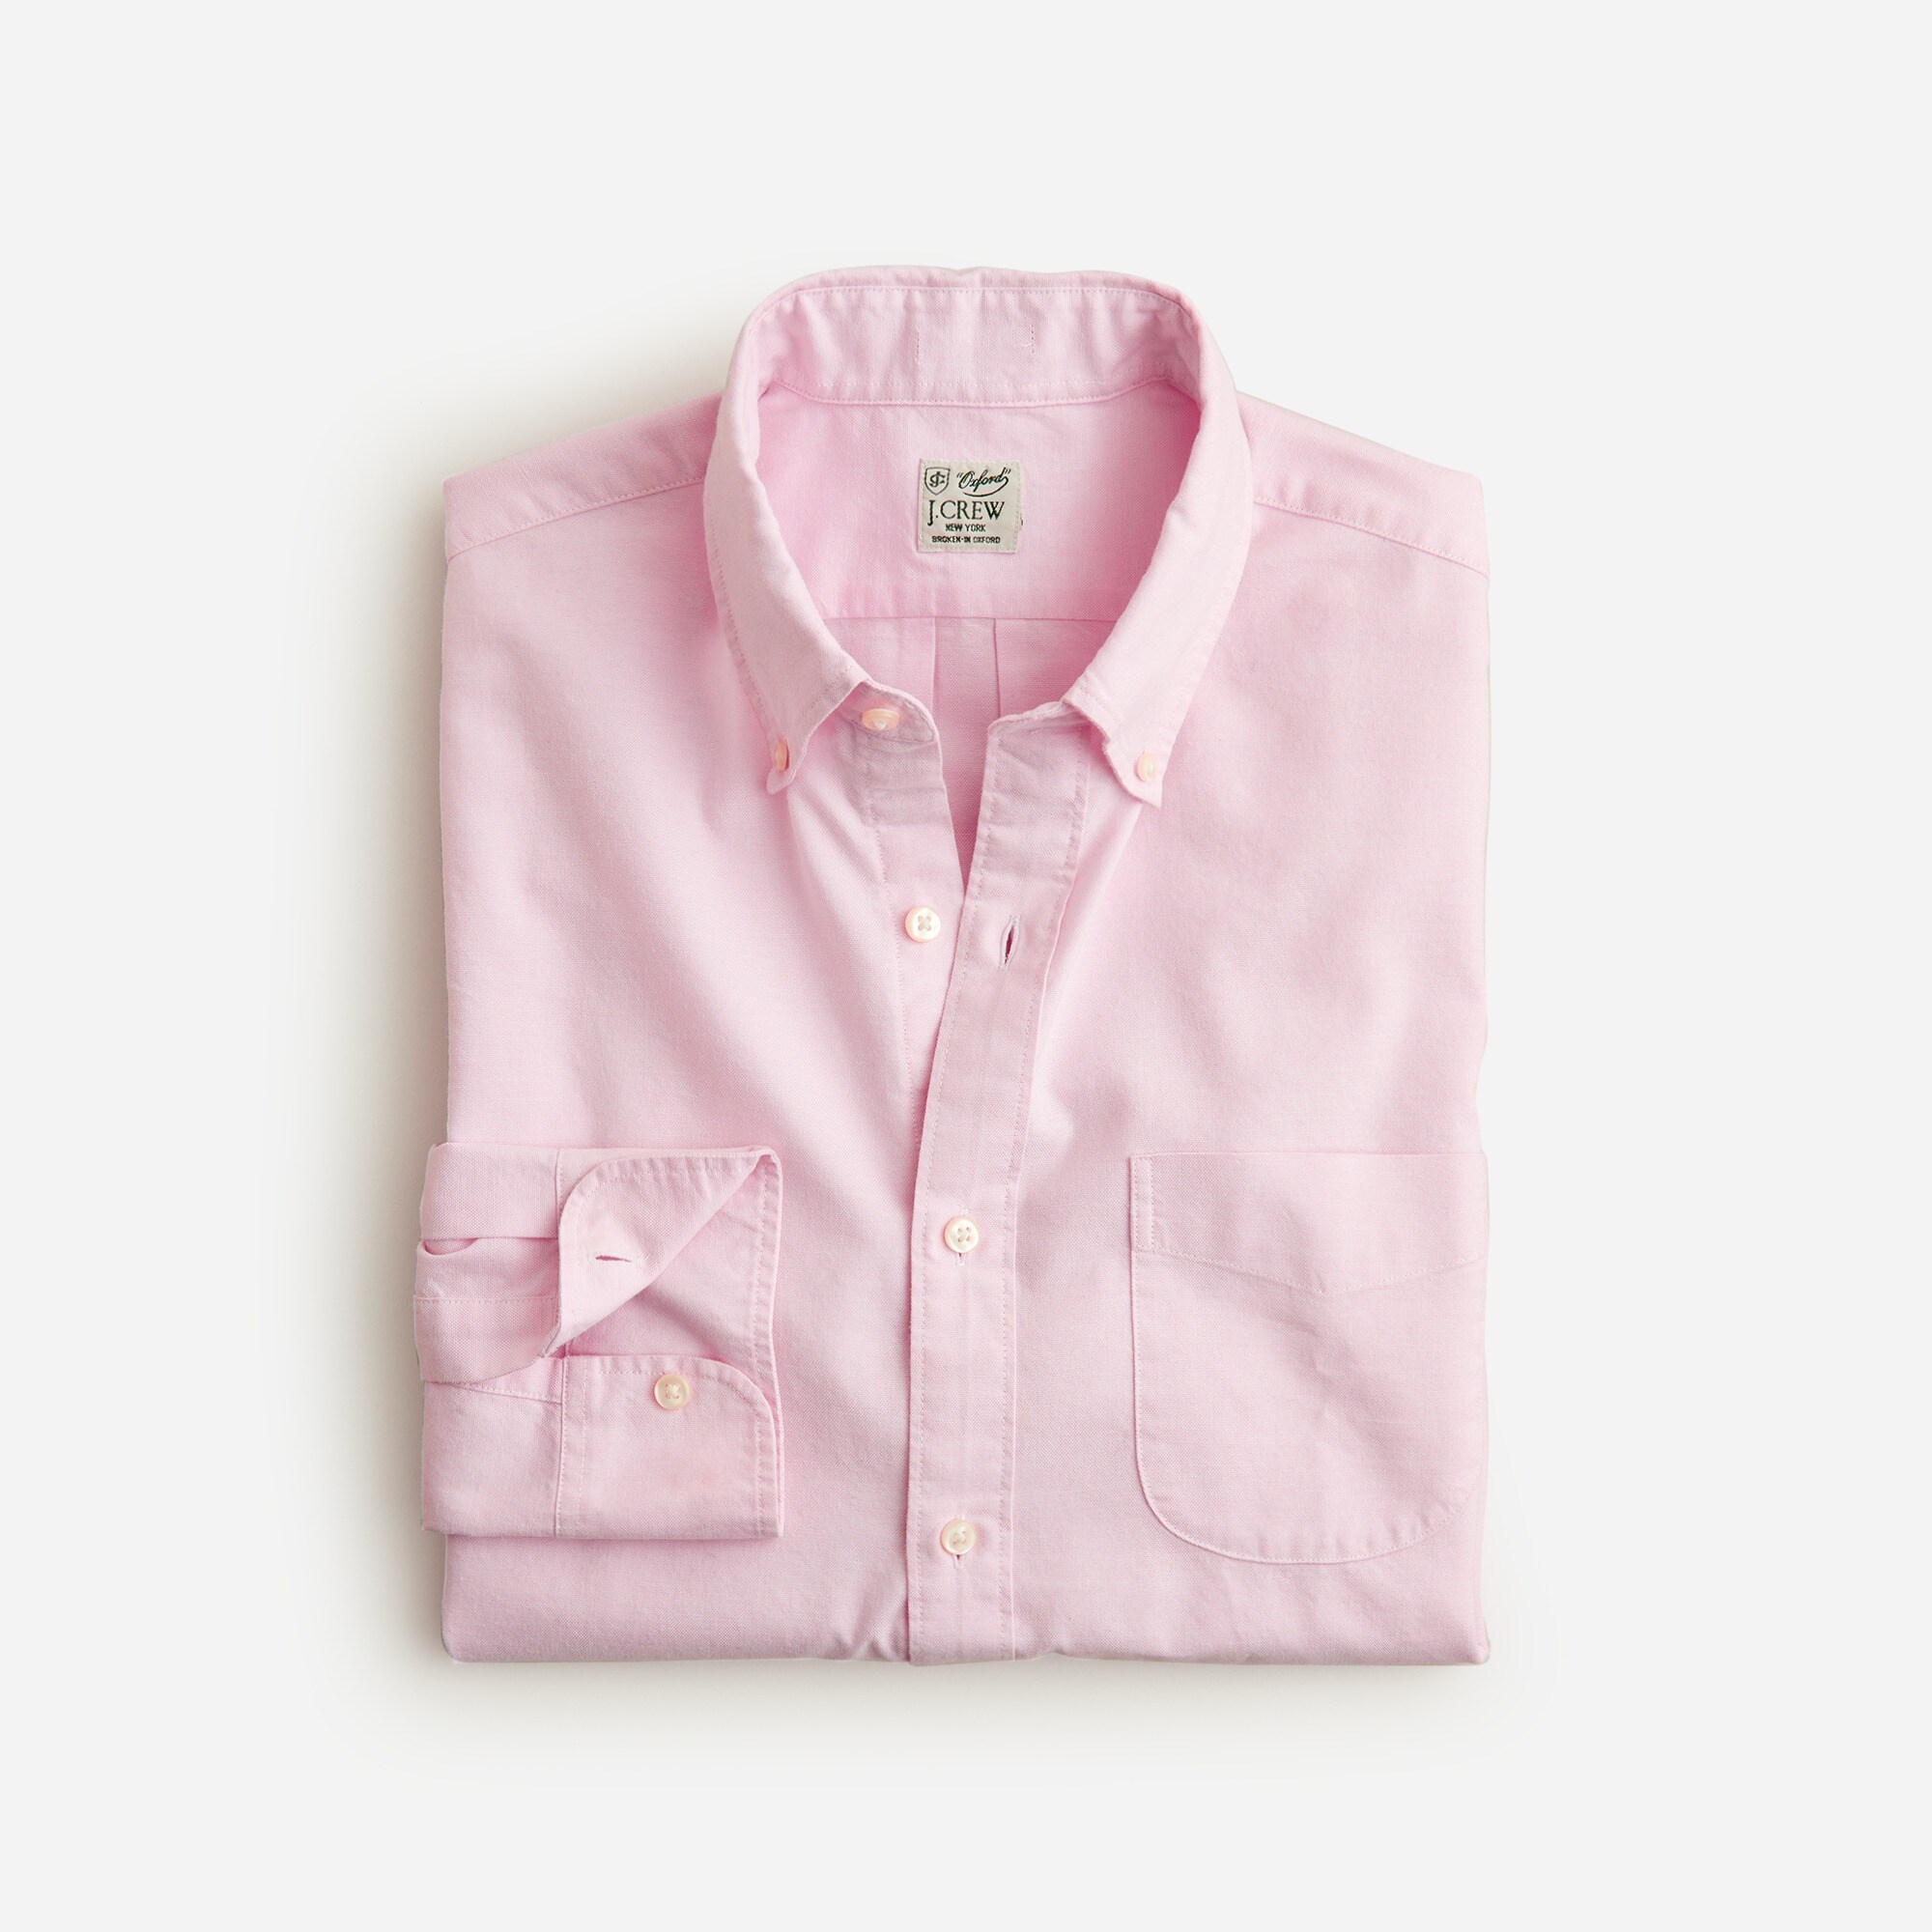  Tall Broken-in organic cotton oxford shirt